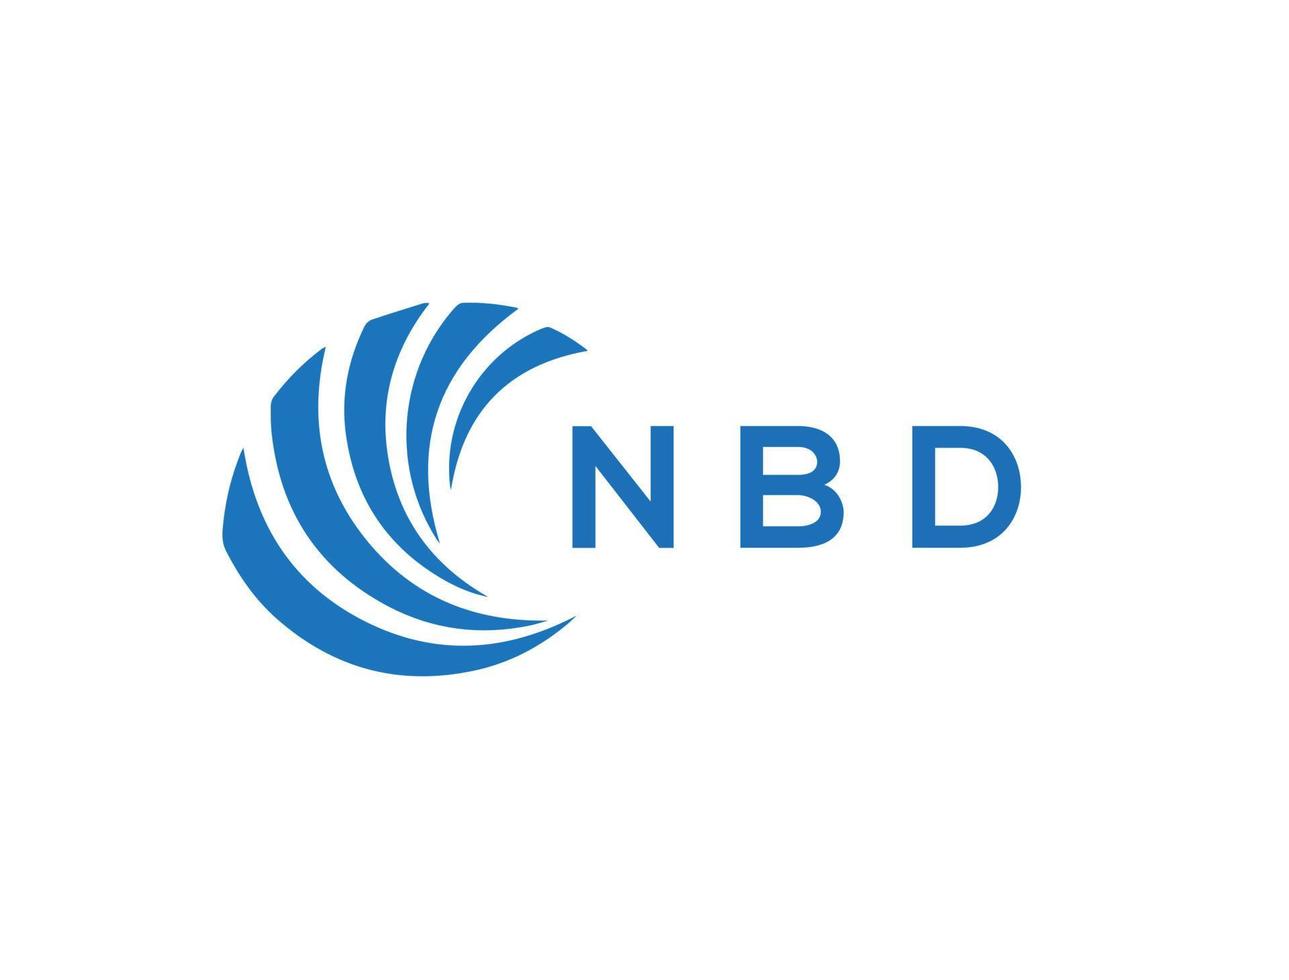 NBD letter logo design on white background. NBD creative circle letter logo concept. NBD letter design. vector